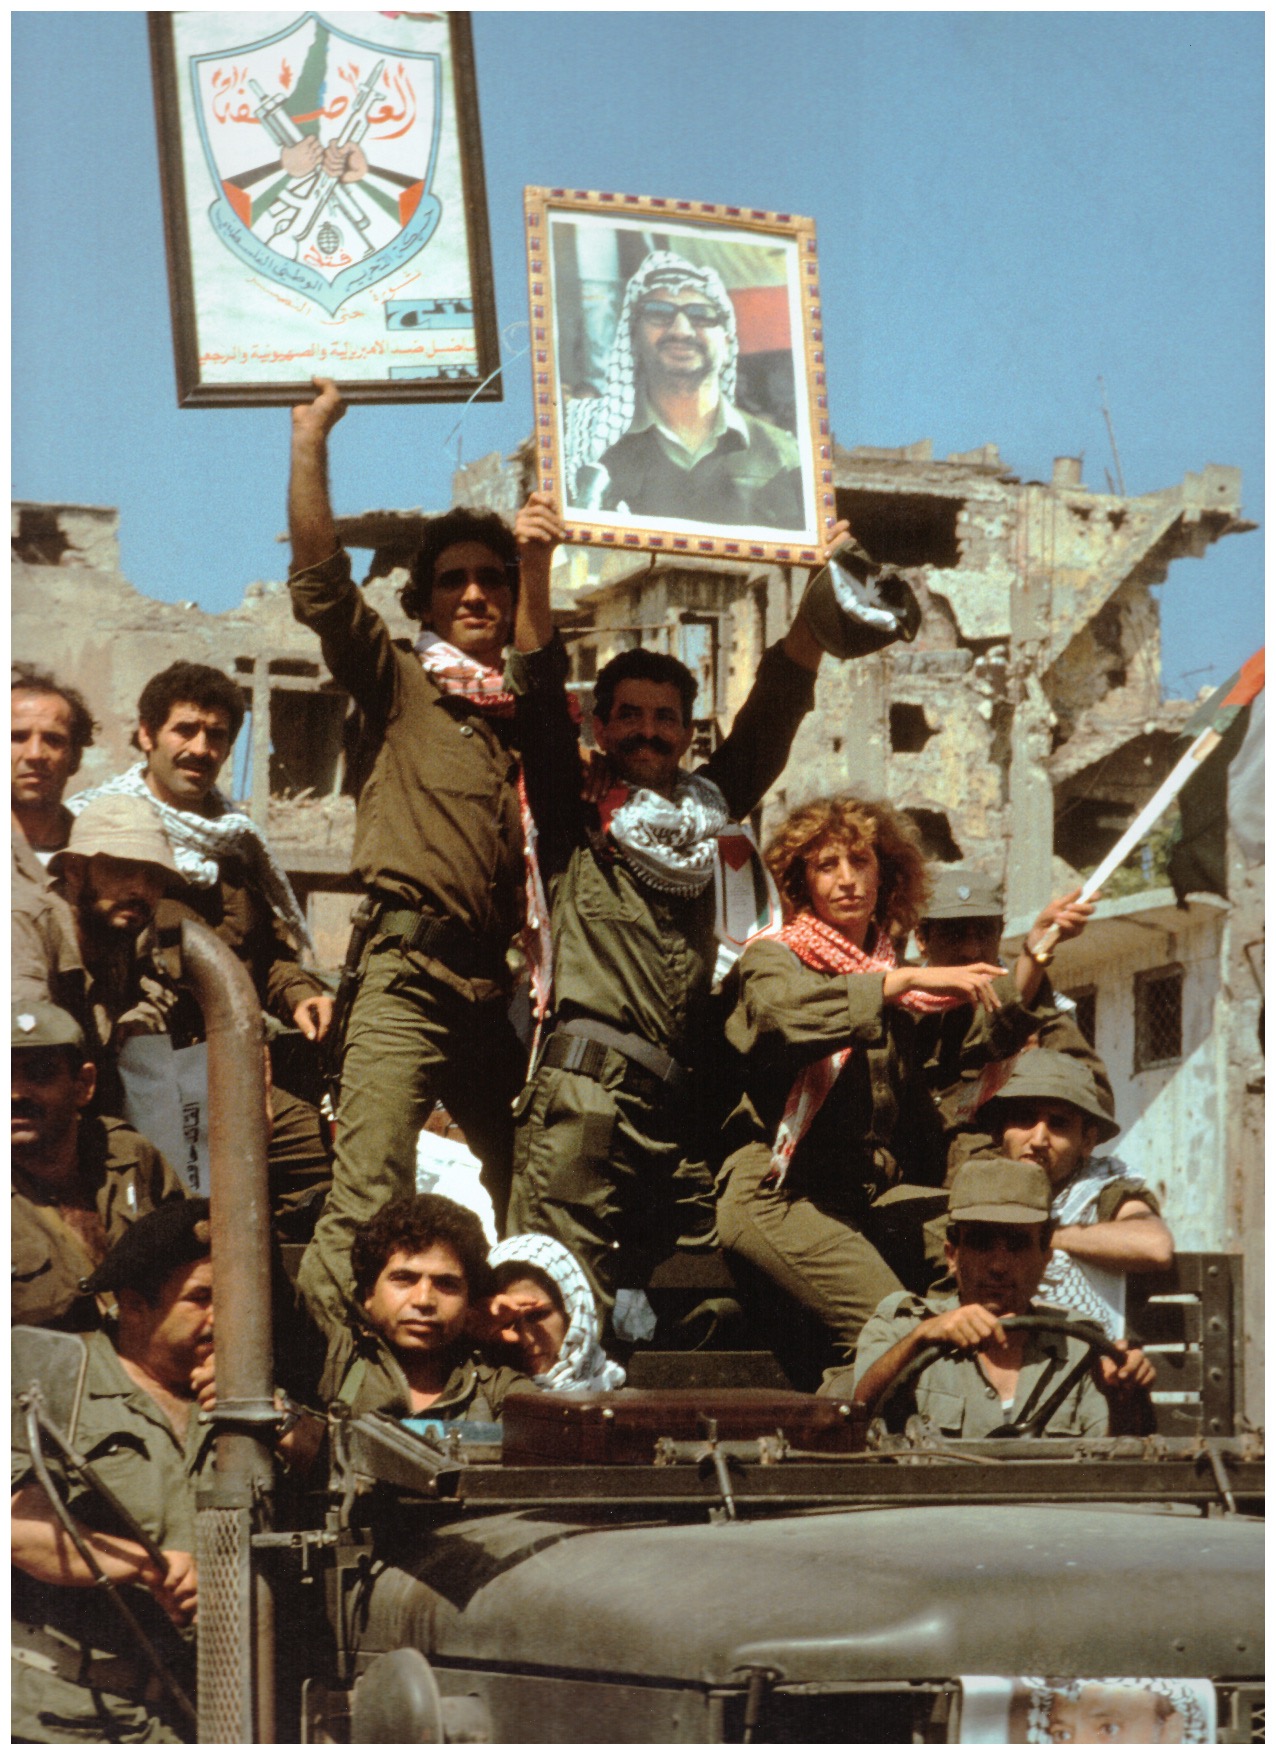 MORVAN, Yan - Archives Yan Morvan - Archive N°8: Yasser Arafat, Liban, 1982-83